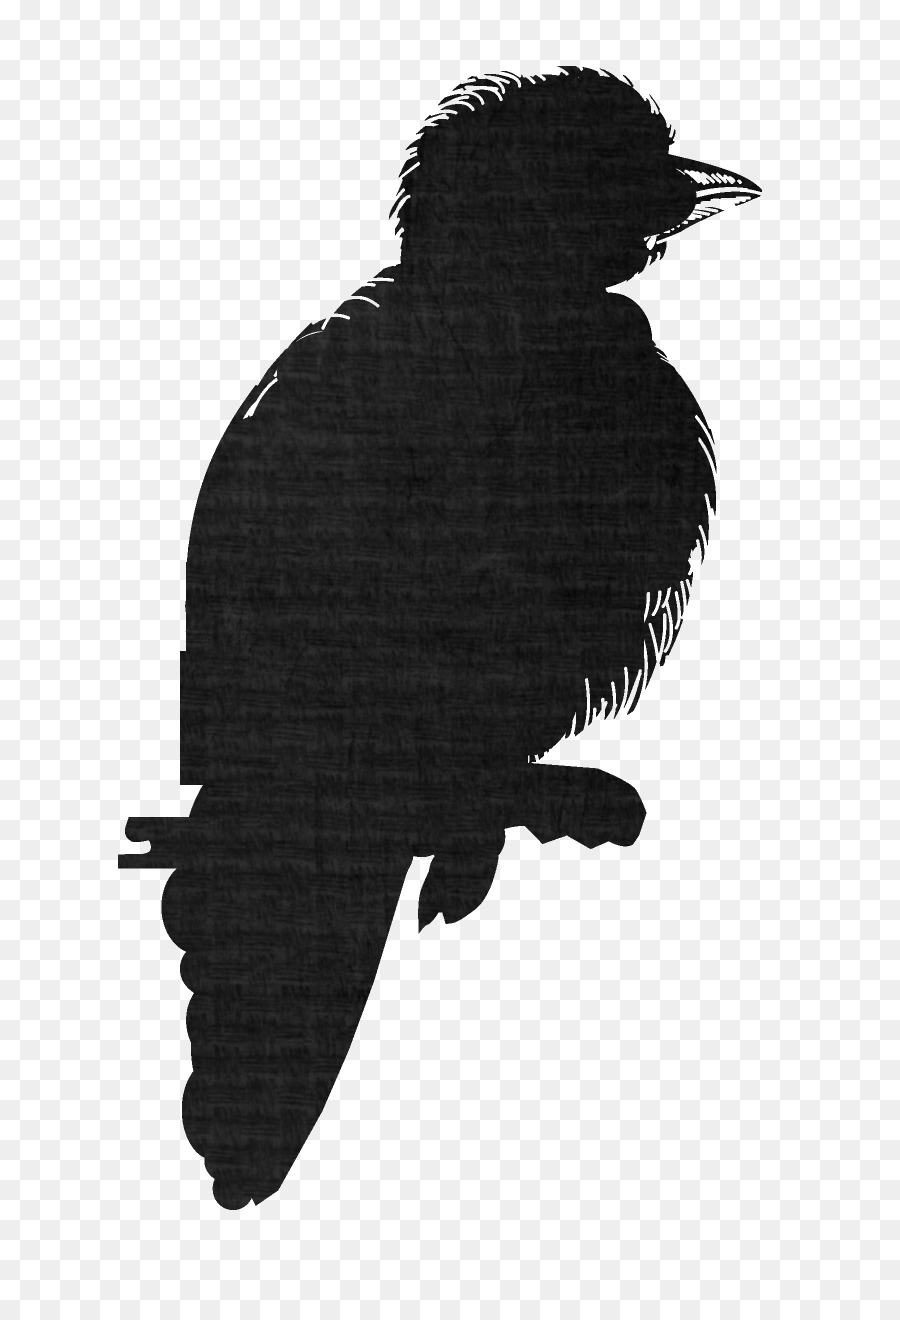 Eagle Fauna Silhouette Crow Beak - eagle png download - 848*1304 - Free Transparent Eagle png Download.